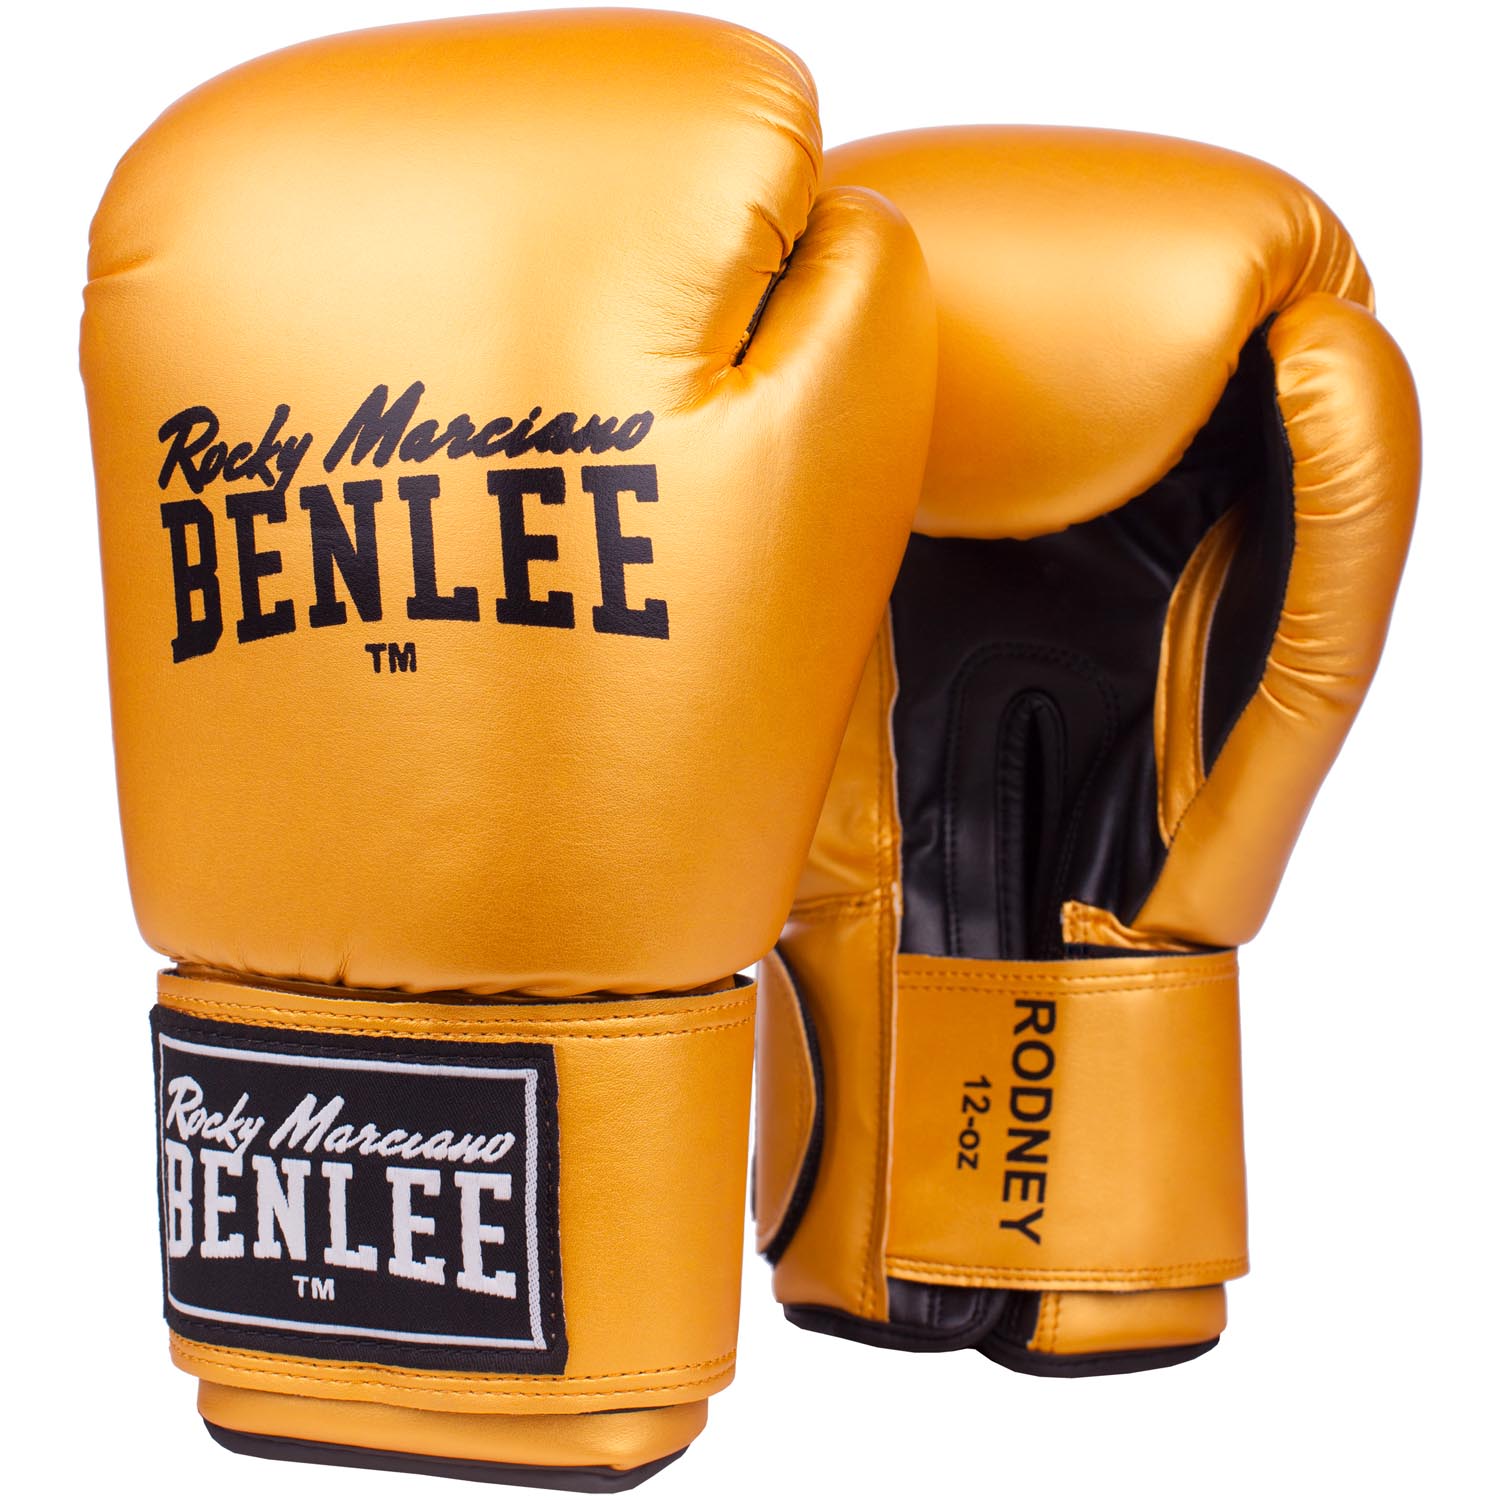 BENLEE Boxhandschuhe, Rodney, gold-schwarz, 14 Oz